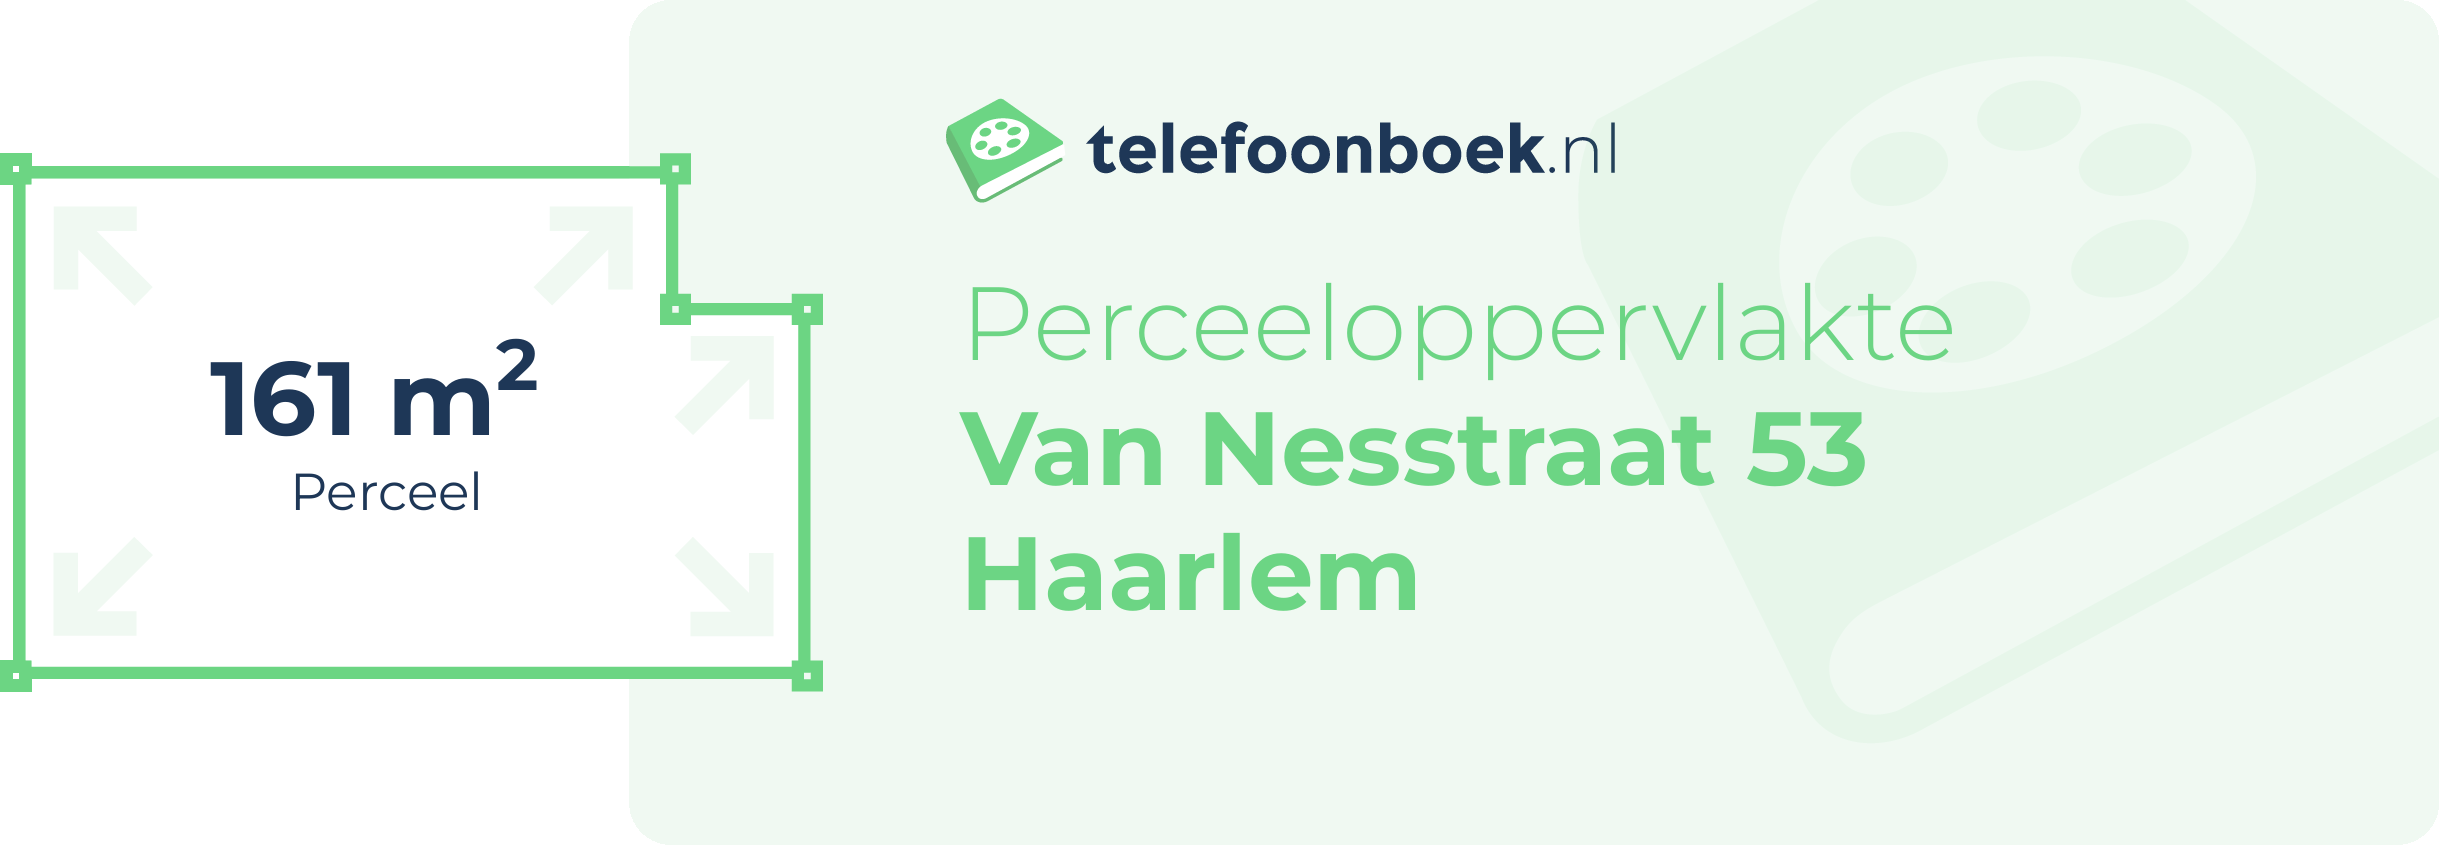 Perceeloppervlakte Van Nesstraat 53 Haarlem